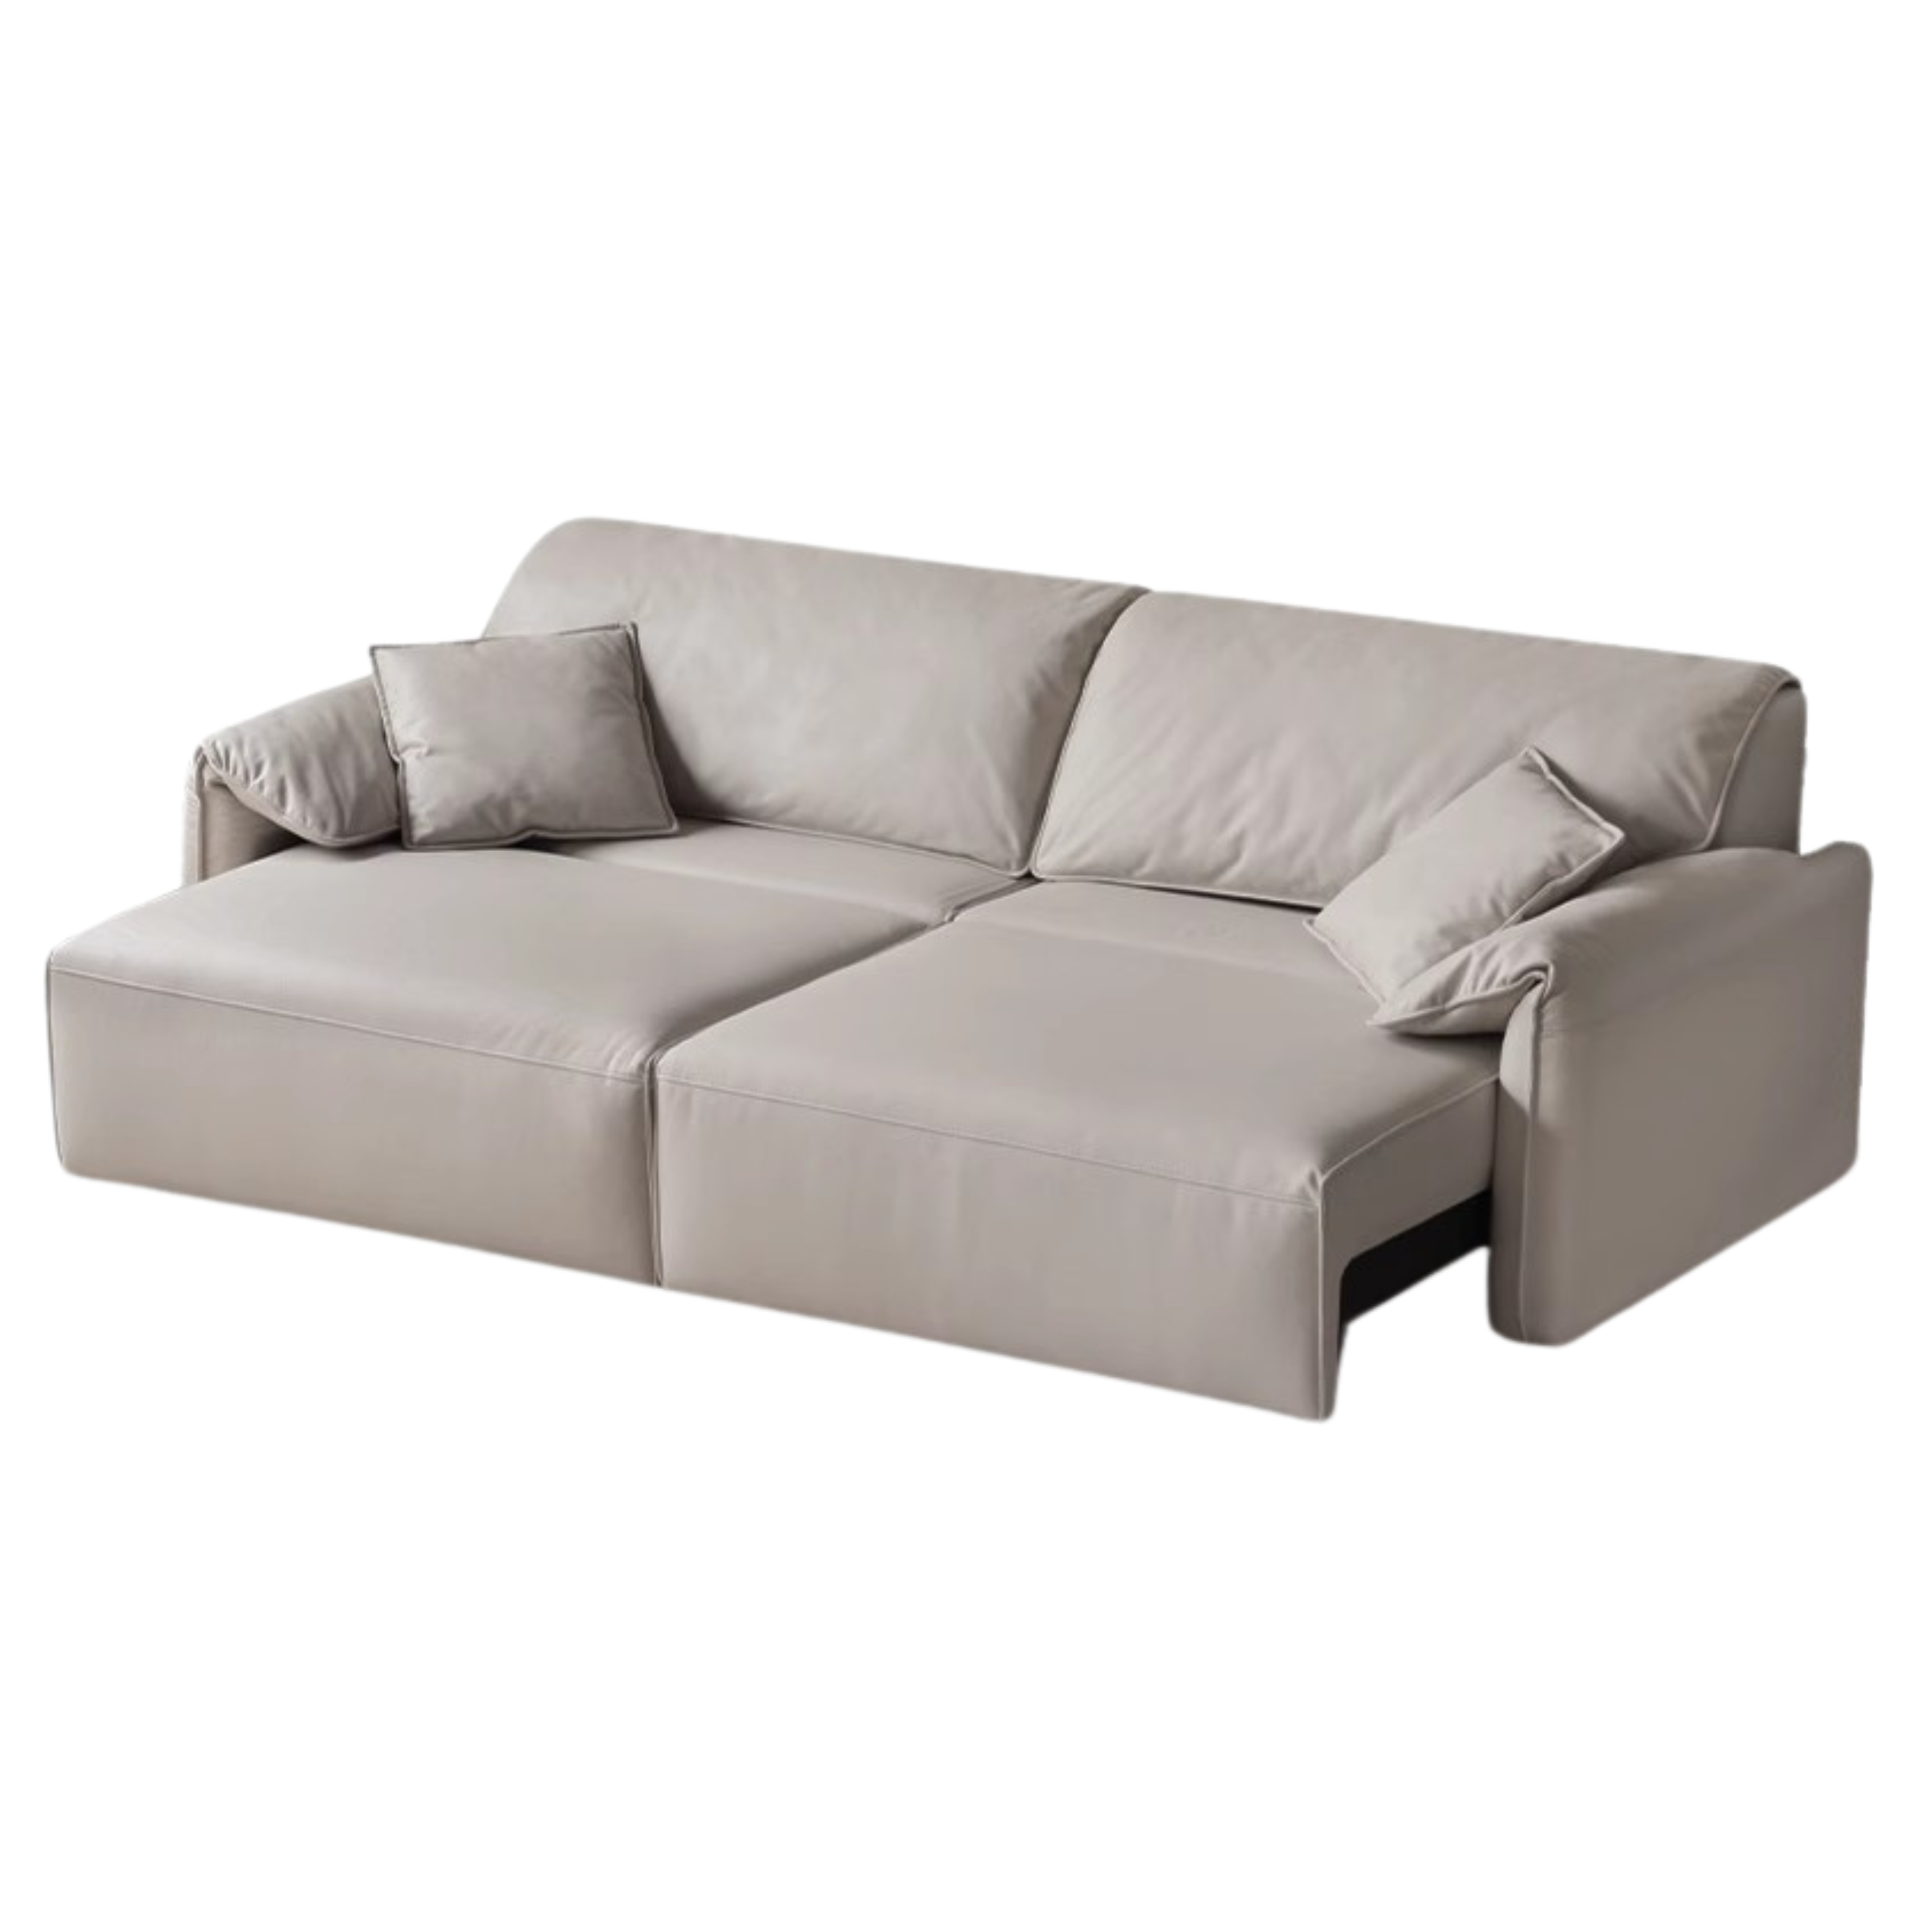 Electric sofa bed foldable dual-purpose cream style white elephant ear retractable sofa